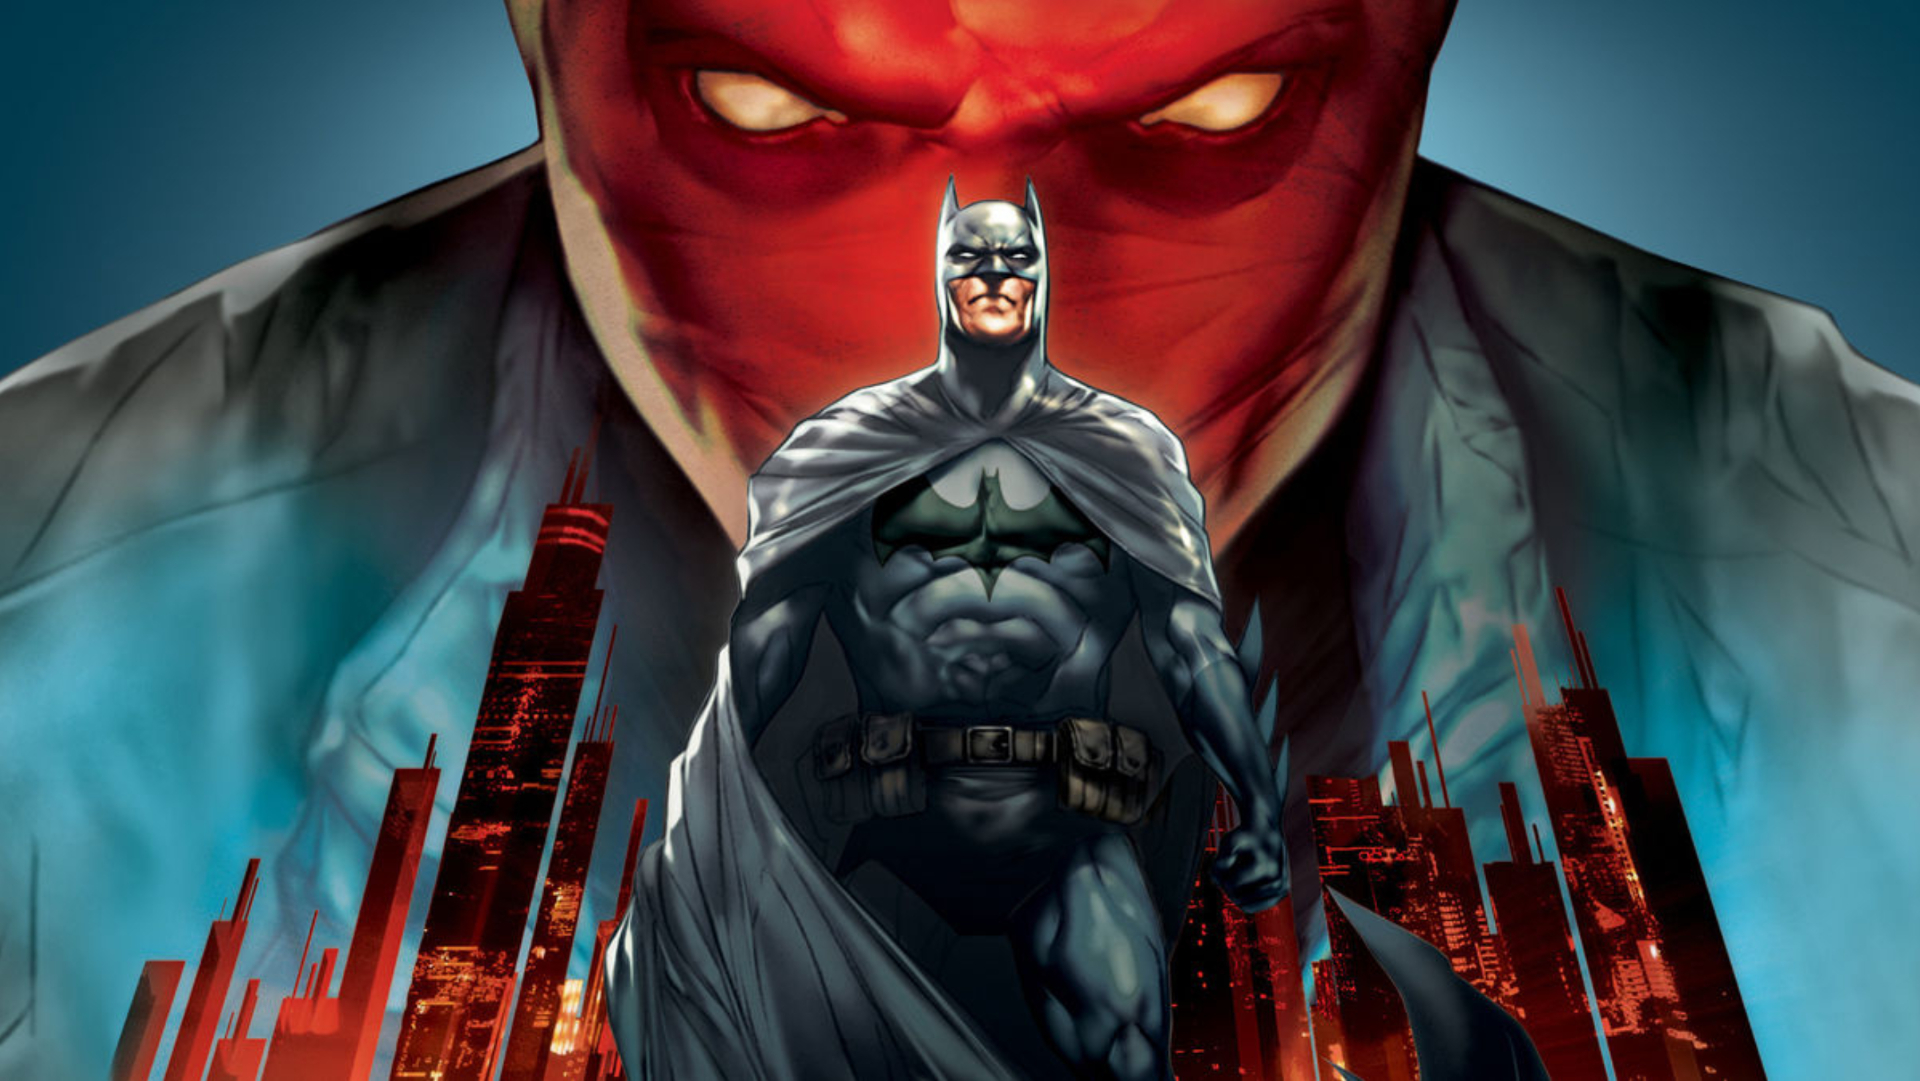 Batman Photos, Download The BEST Free Batman Stock Photos & HD Images